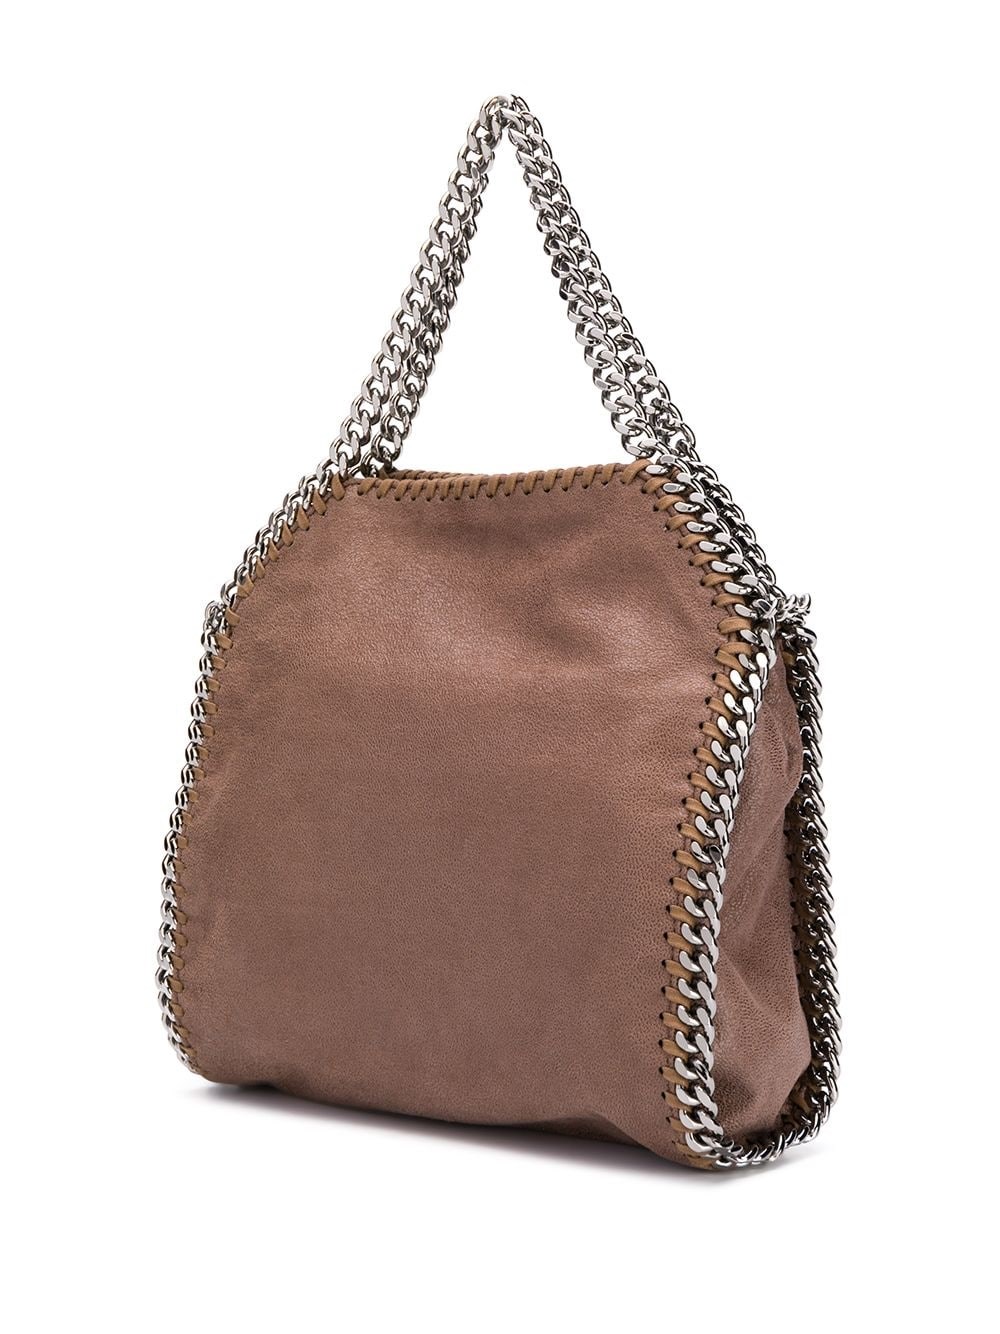 Stella Mccartney Small Falabella Bag In Brown